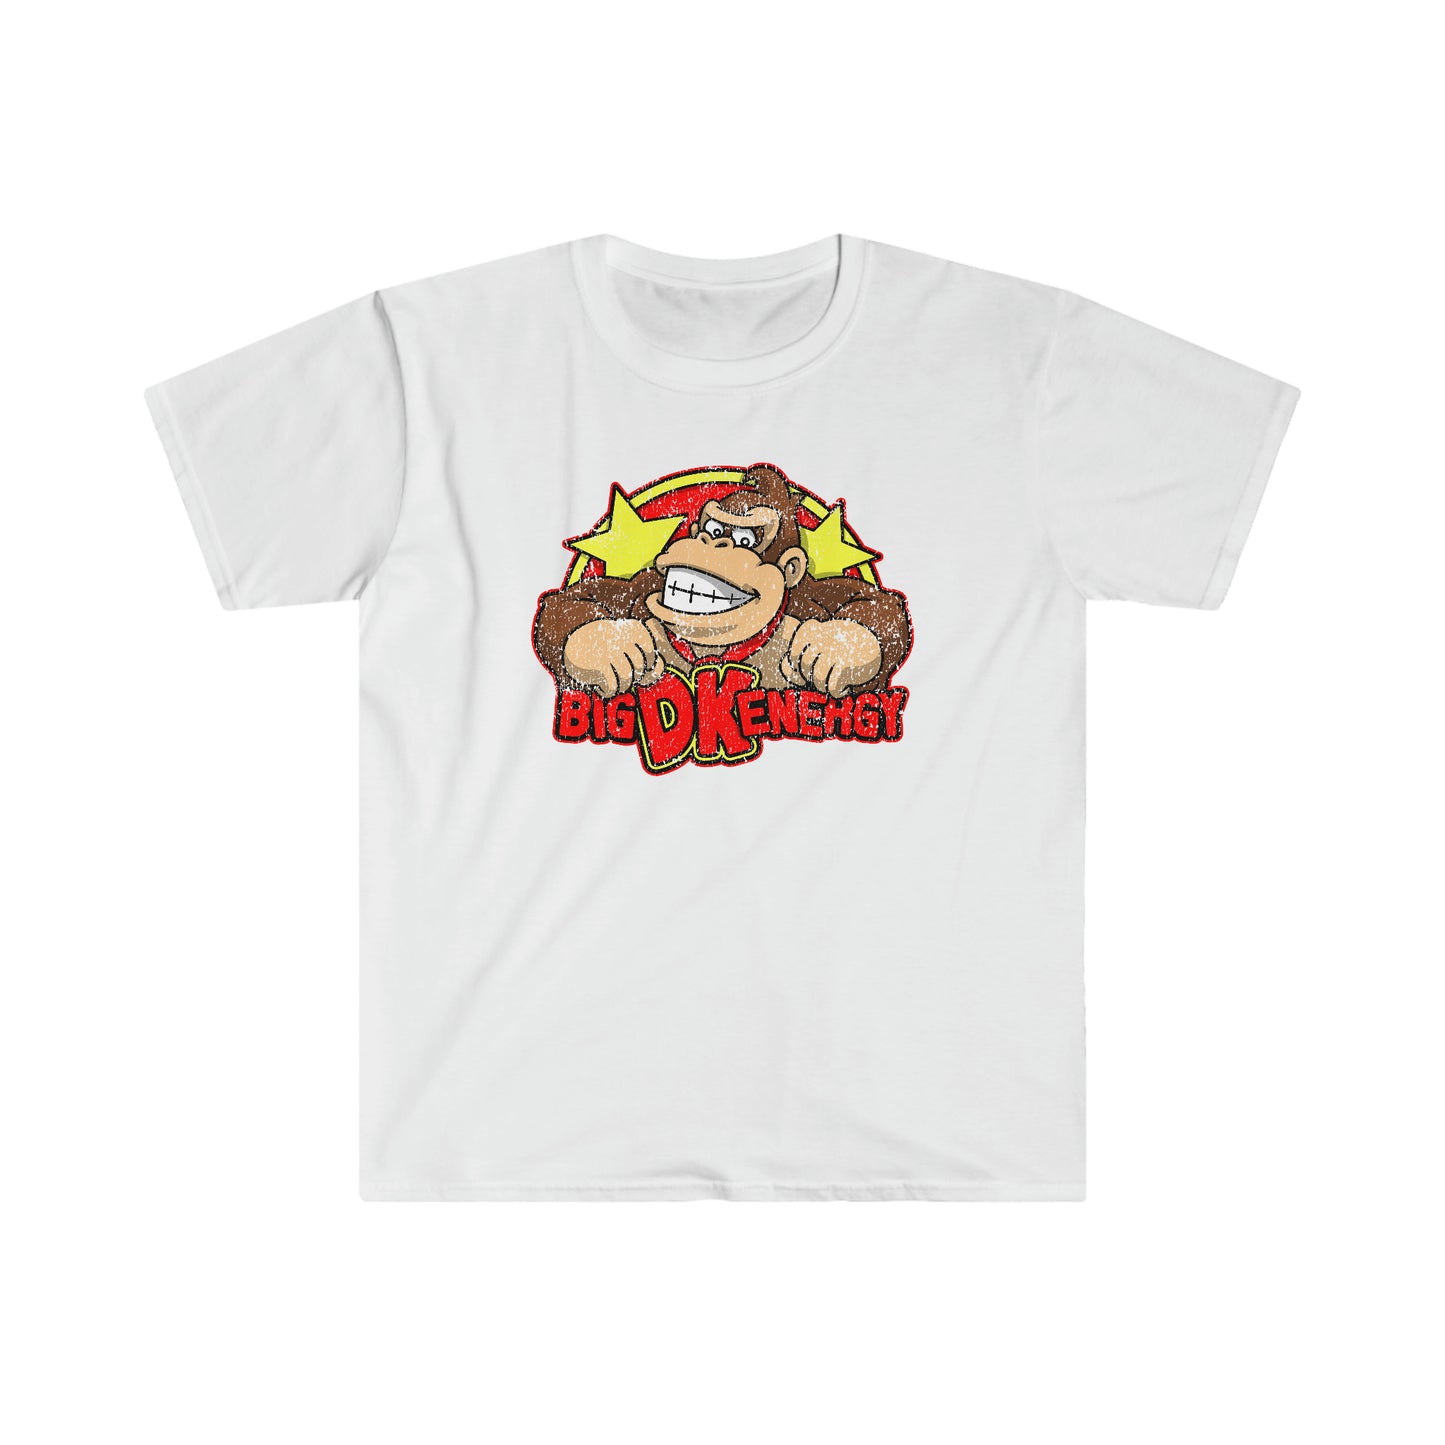 Big DK Energy 2.0 t-shirt